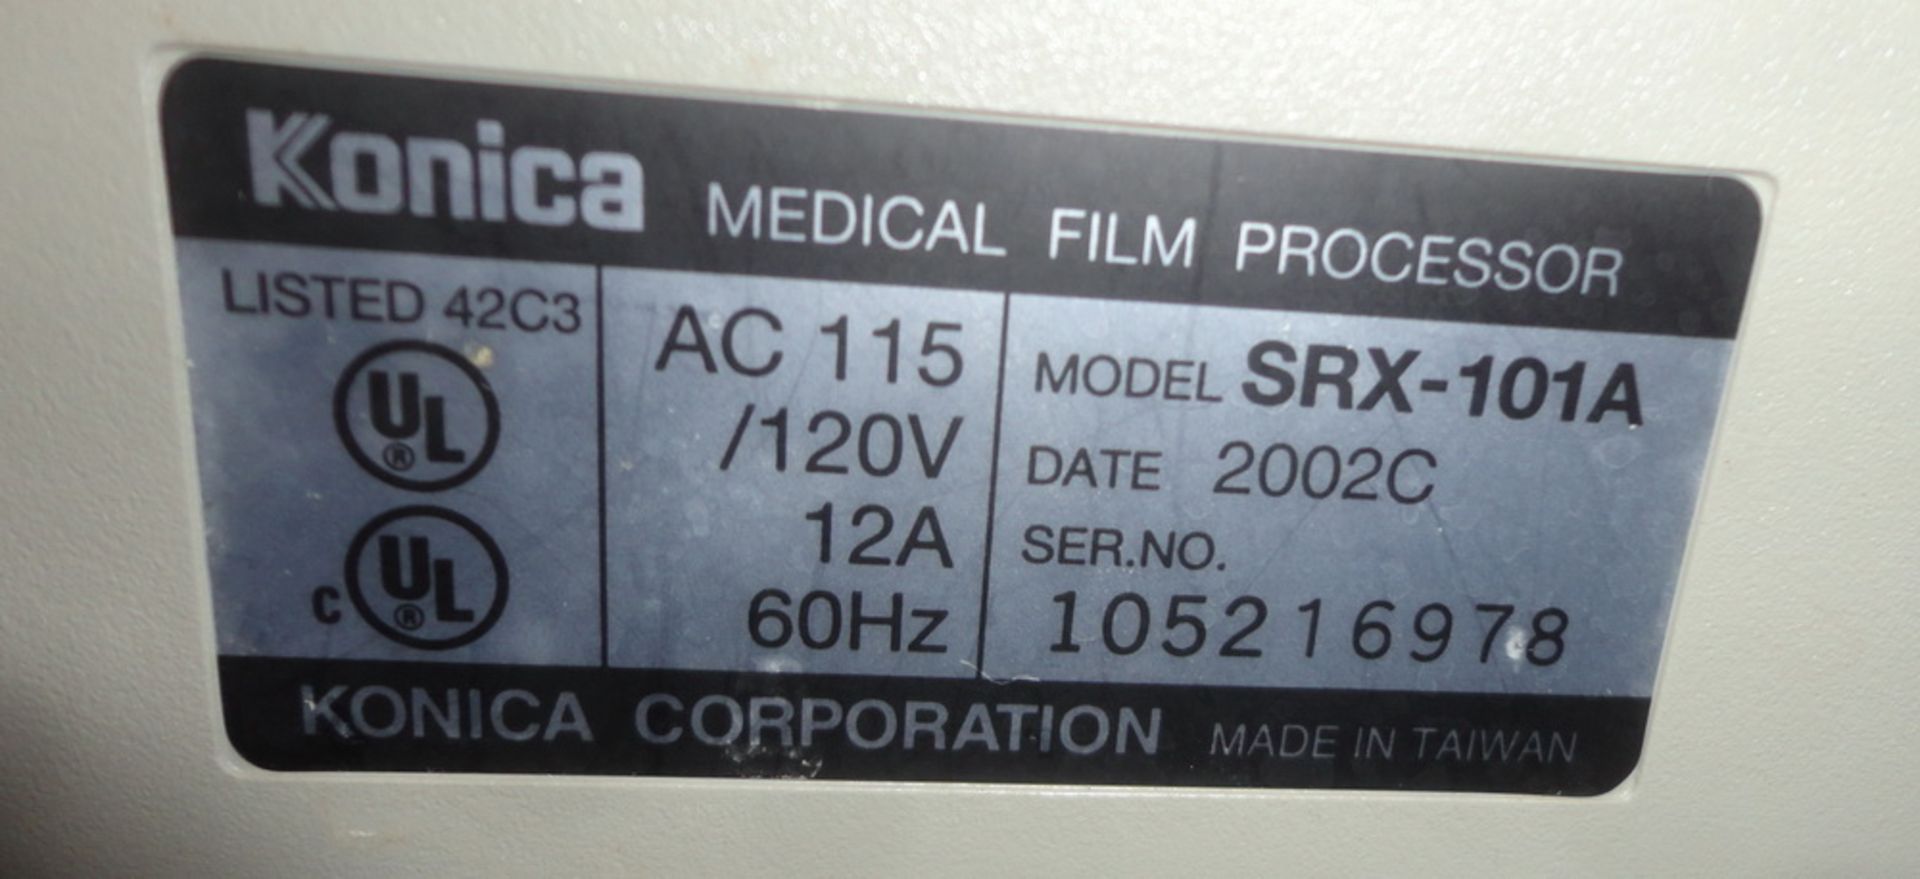 Konica Medical Film Processor, Model SRX-1019, S/N 105216978 - Image 3 of 3